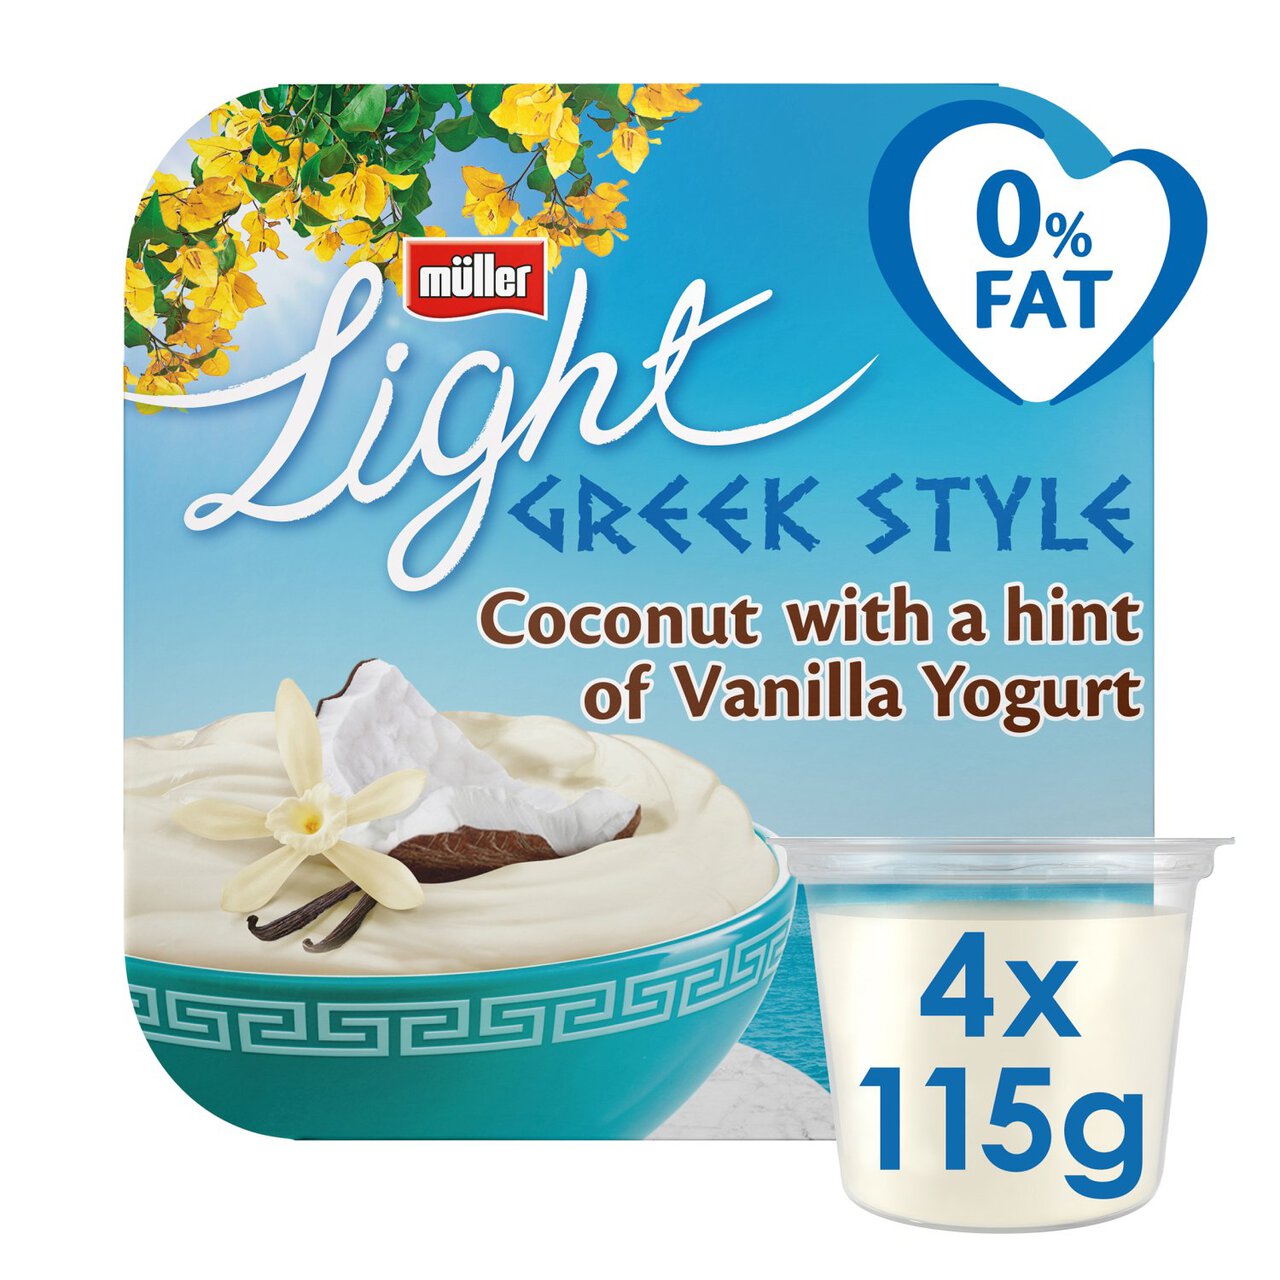 Muller Light Greek Style Coconut with a Hint of Vanilla Yogurt 4 x 115g